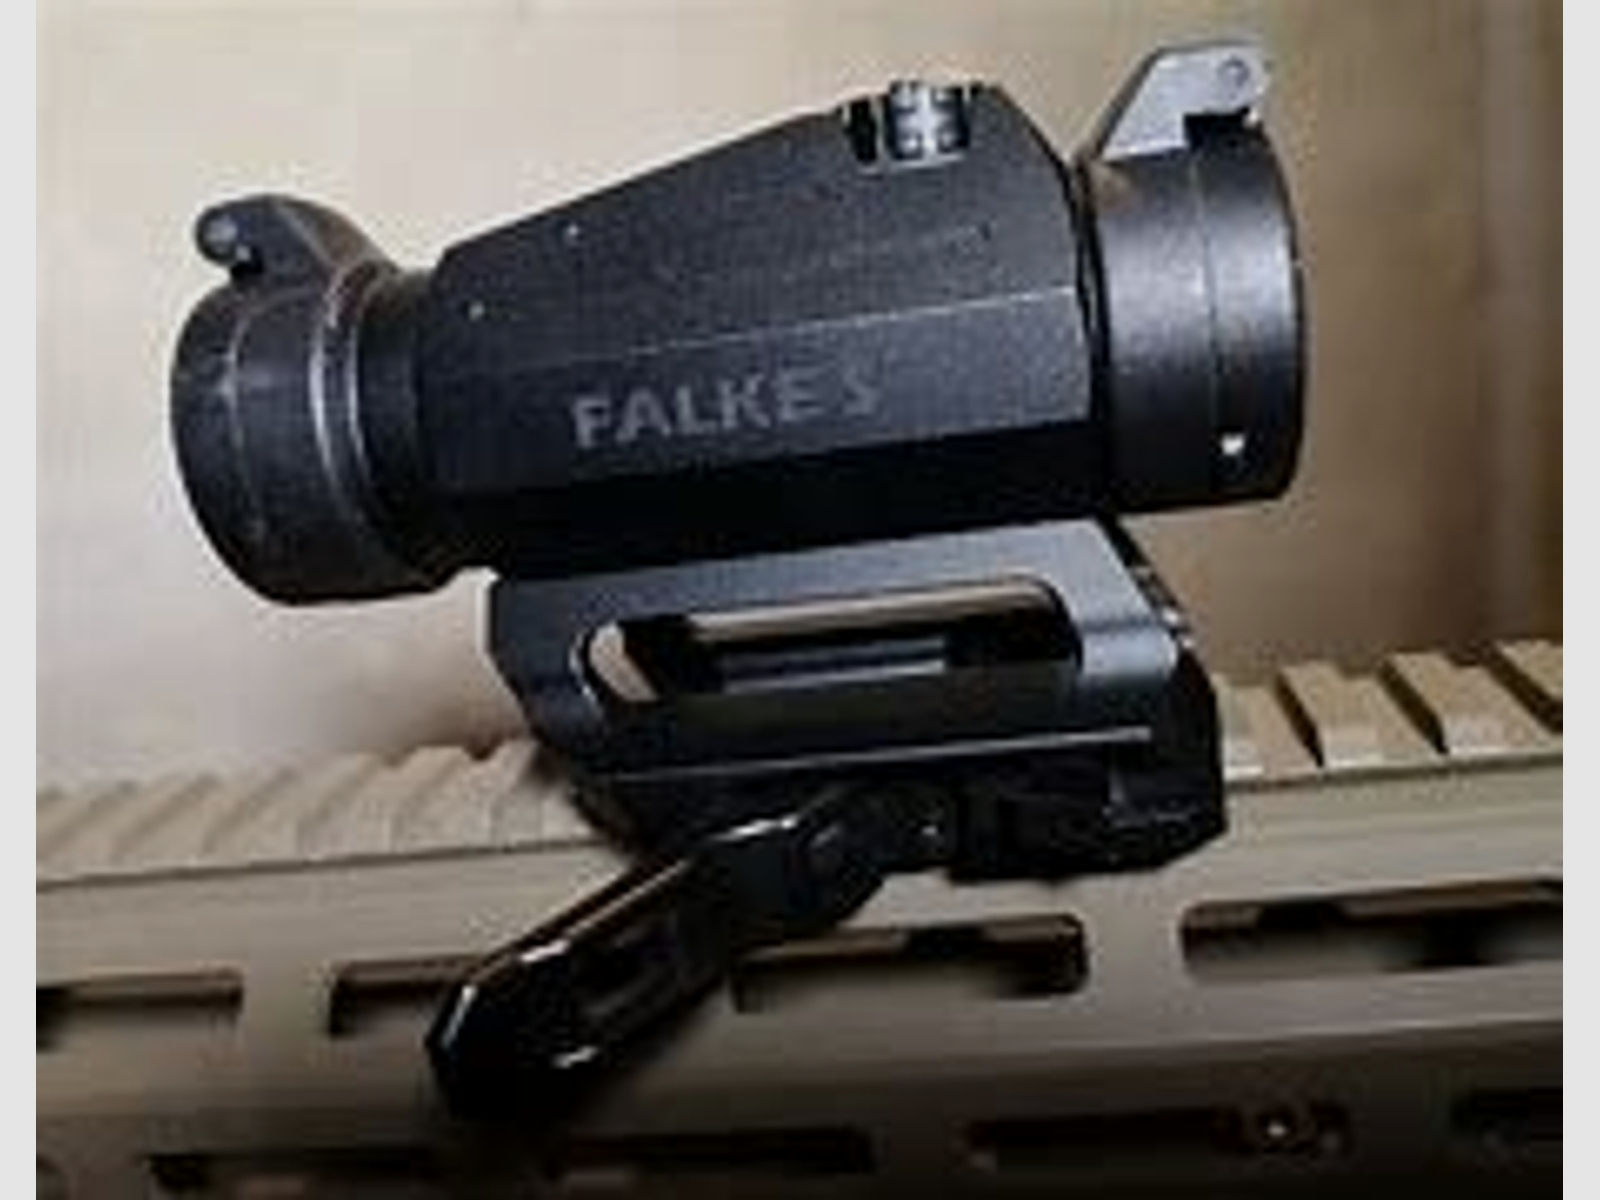 Falke	 Falke S Red Dot Sight